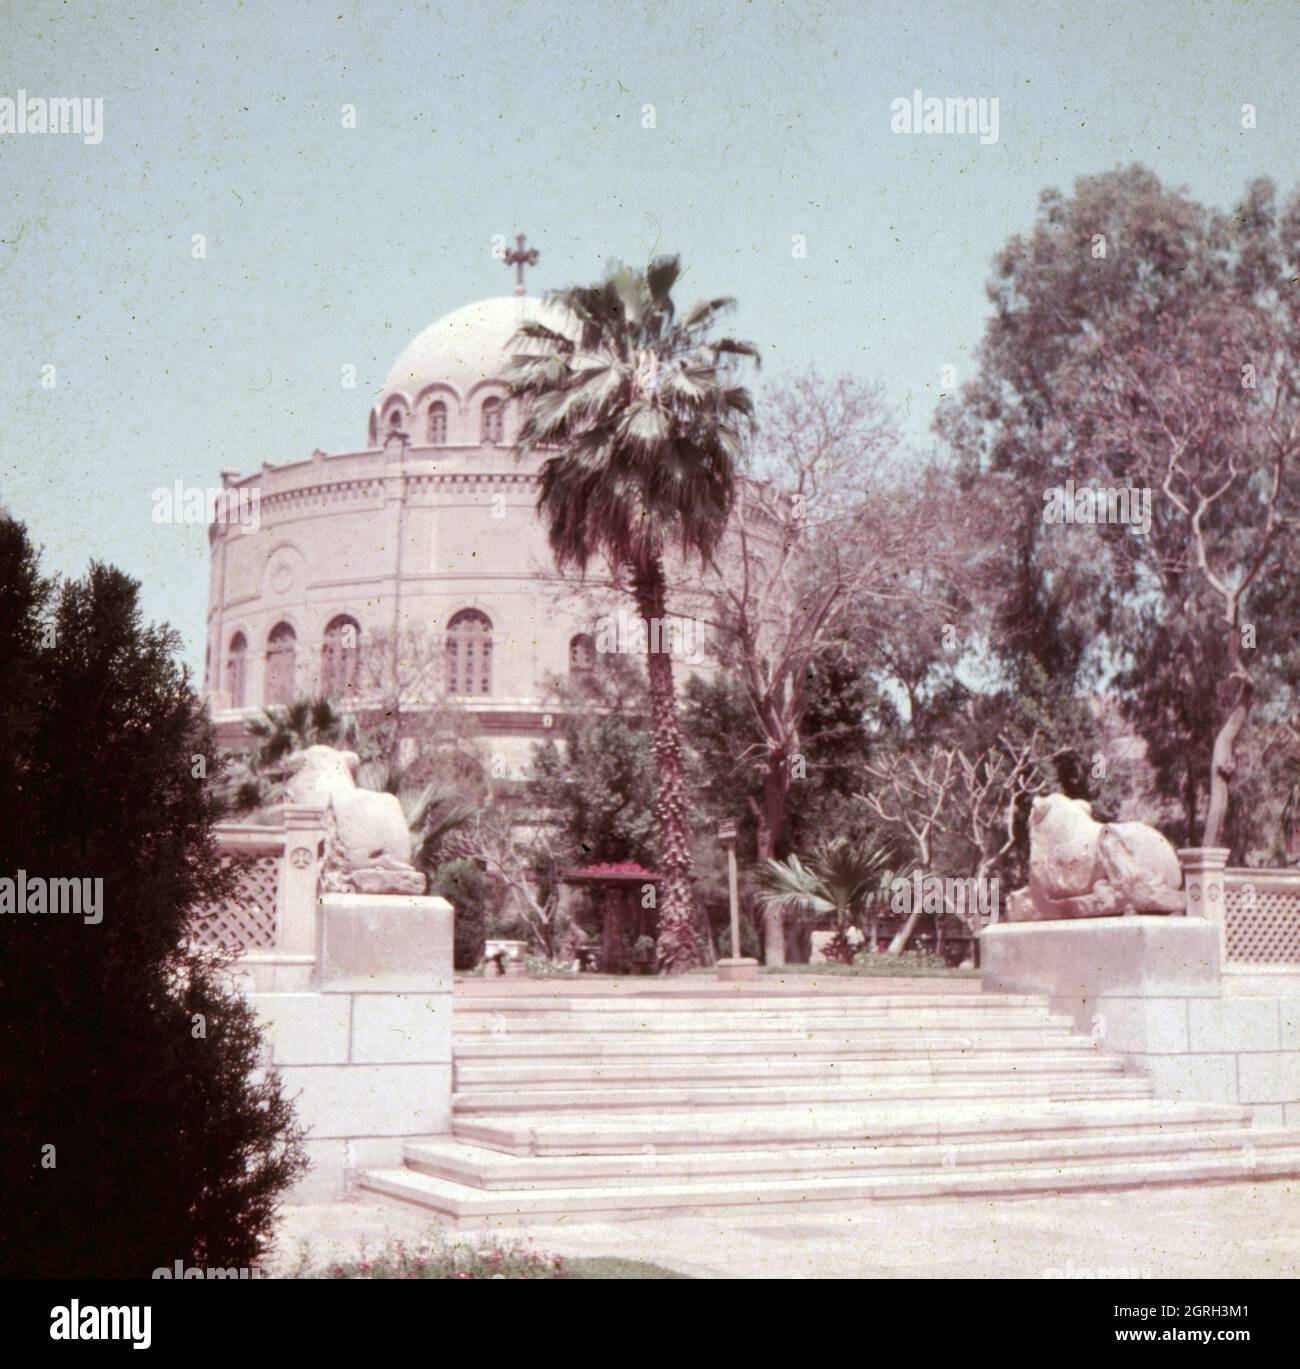 Koptische Mar Girgis Kirche in Kairo, Ägypten 1955. Coptic Mar Girgis church at Cairo, Egypt 1955. Stock Photo